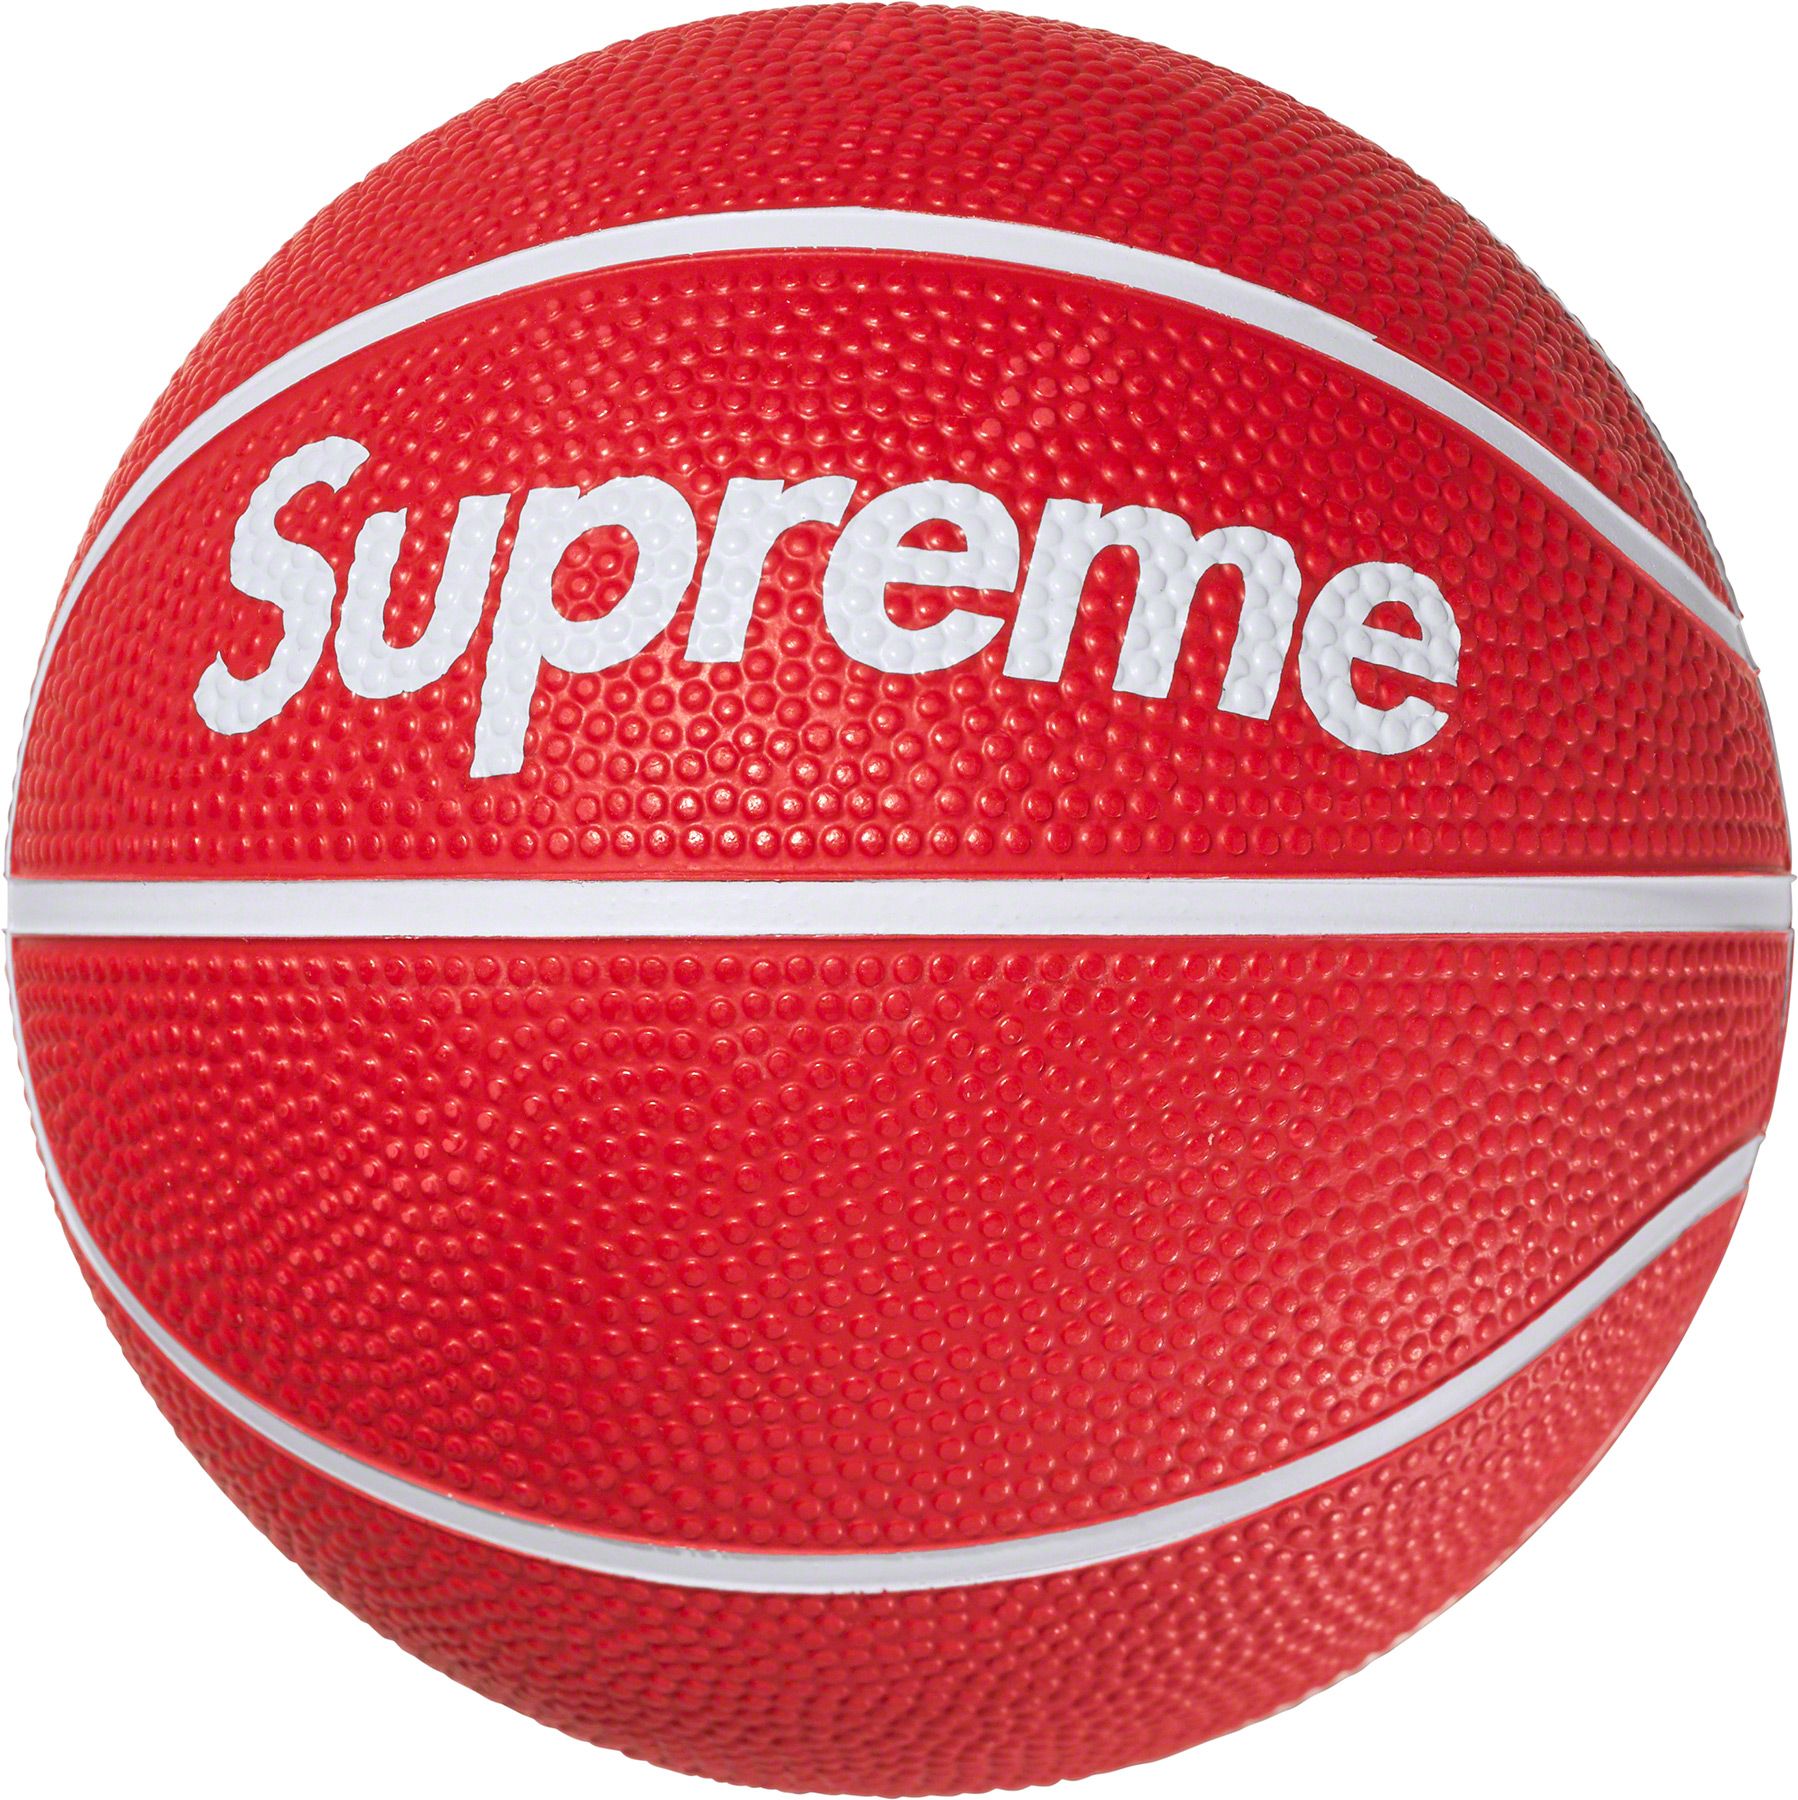 特集 Supreme x Spalding Mini Basketball Hoop | www.artfive.co.jp